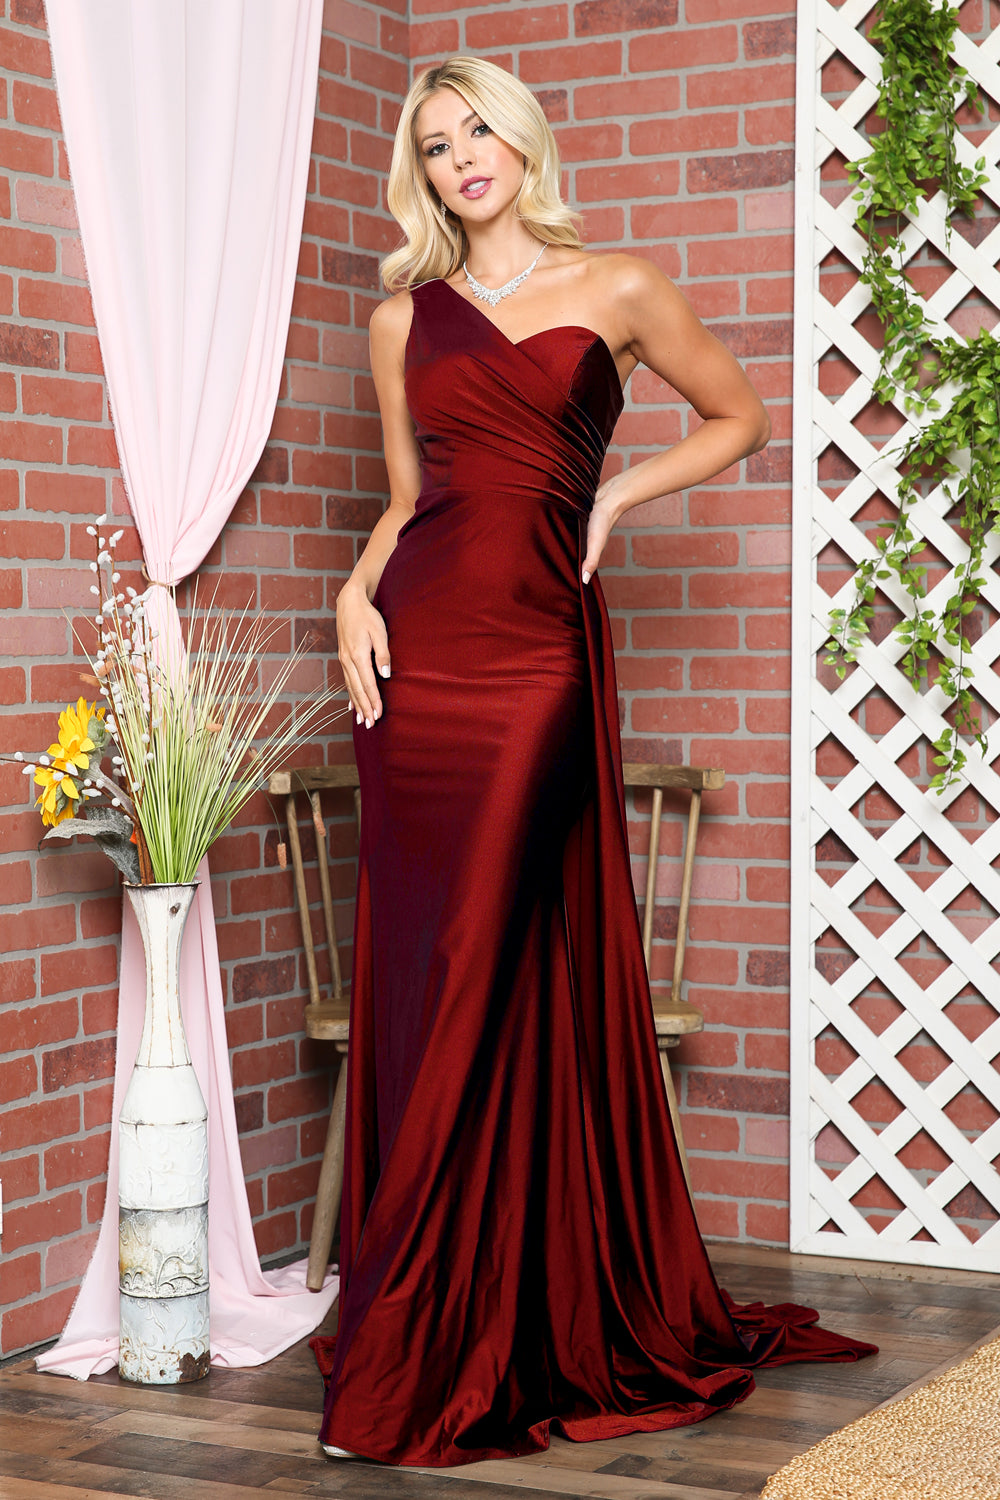 One Shoulder Fit & Flare Lycra Eleganr Side Cape Long Prom Dress AC387-Prom Dress-smcfashion.com